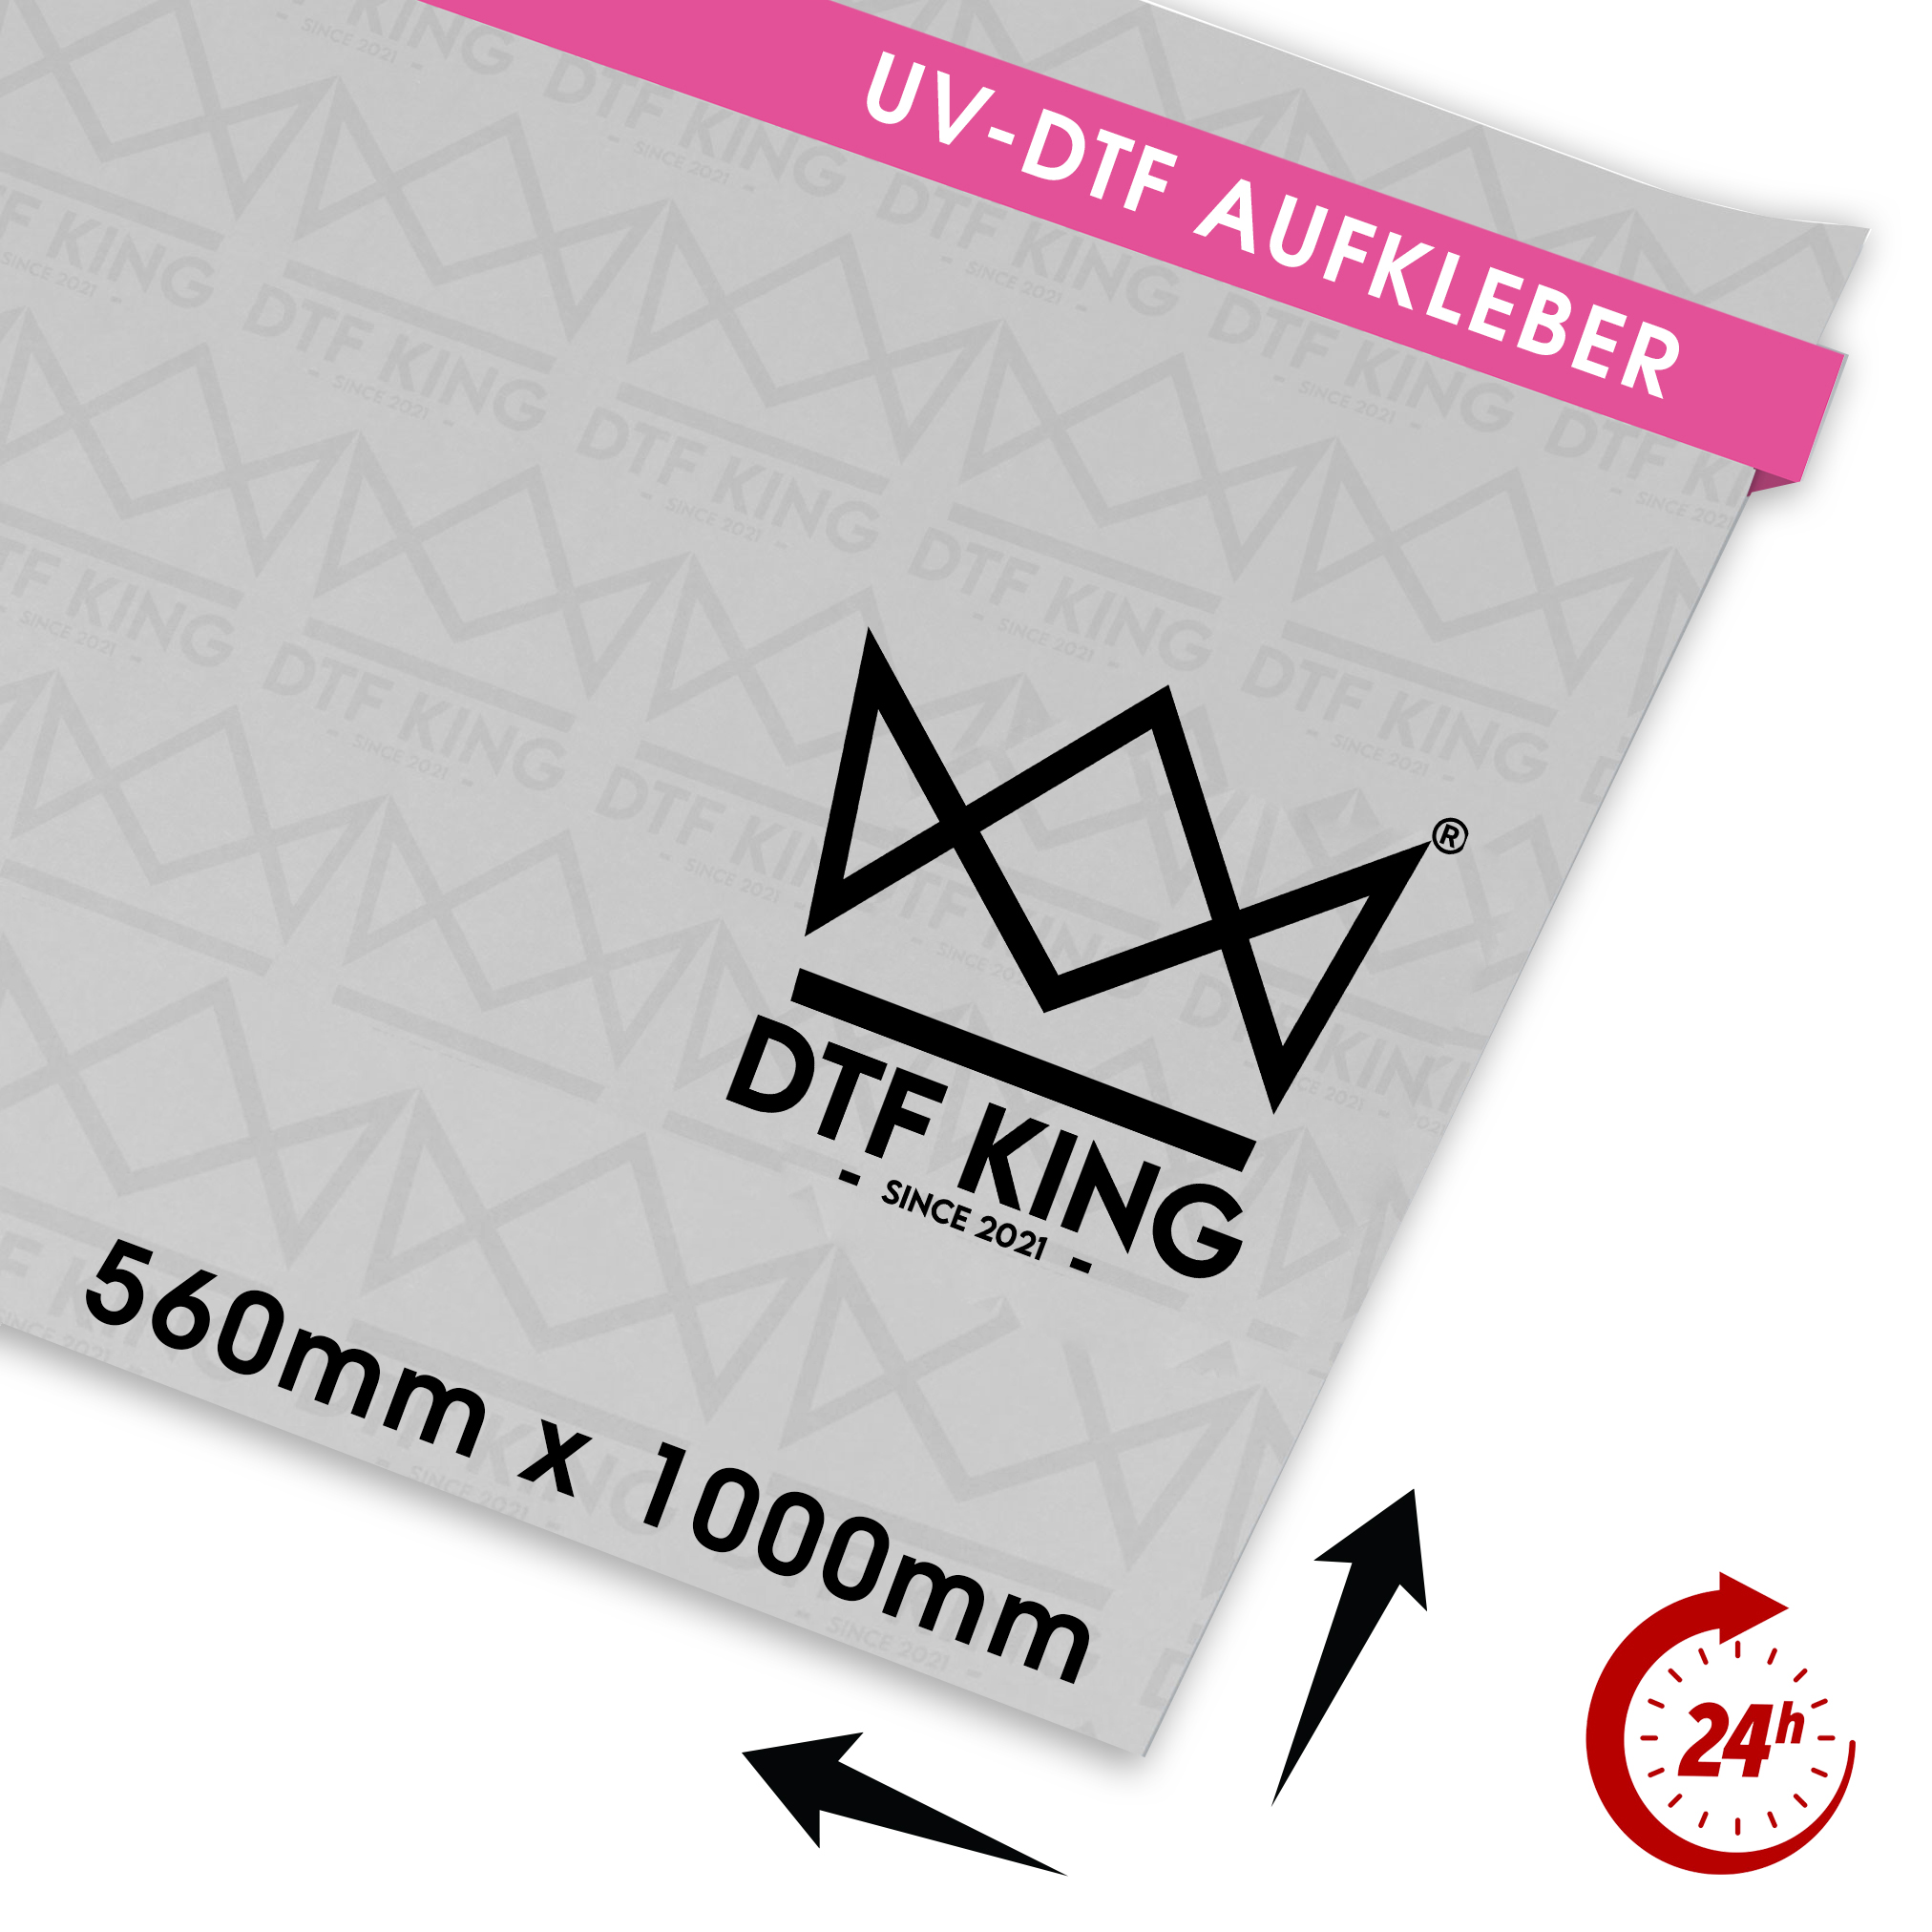 UV DTF Transfer EXPRESS 560 x 1000 mm Aufkleber Sticker